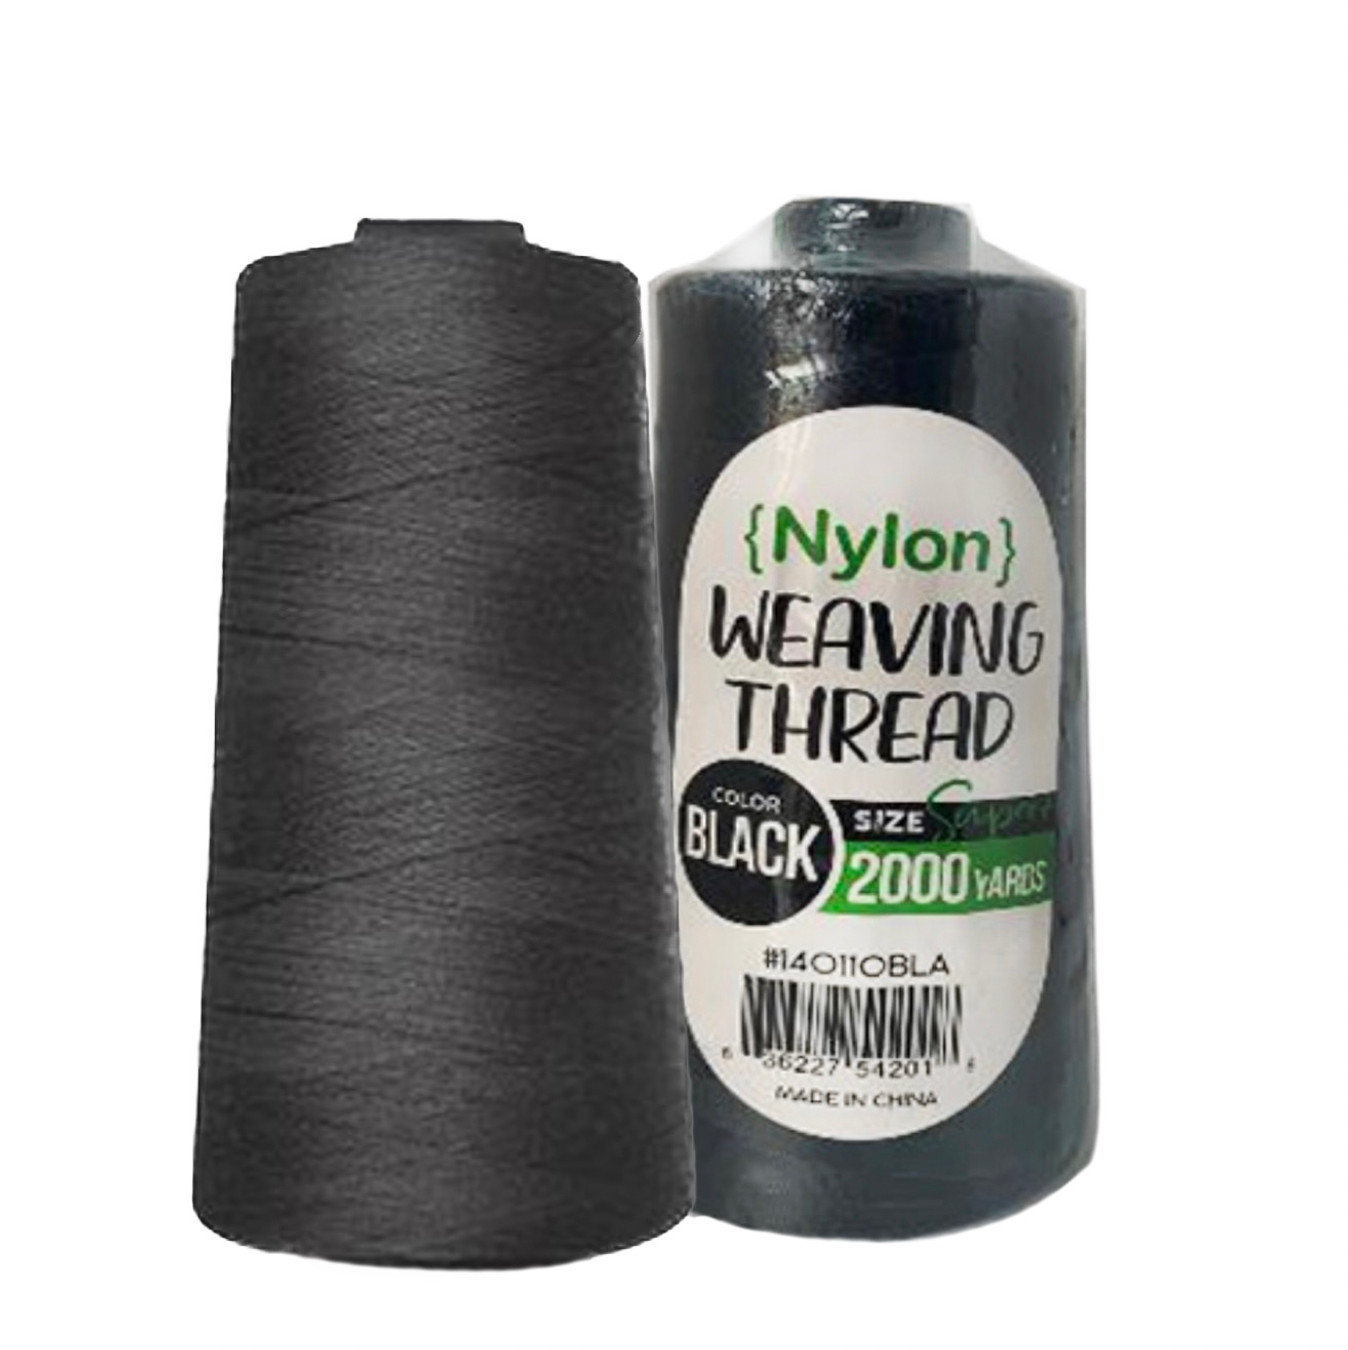 Nylon Weaving Thread Black 2000 Yards